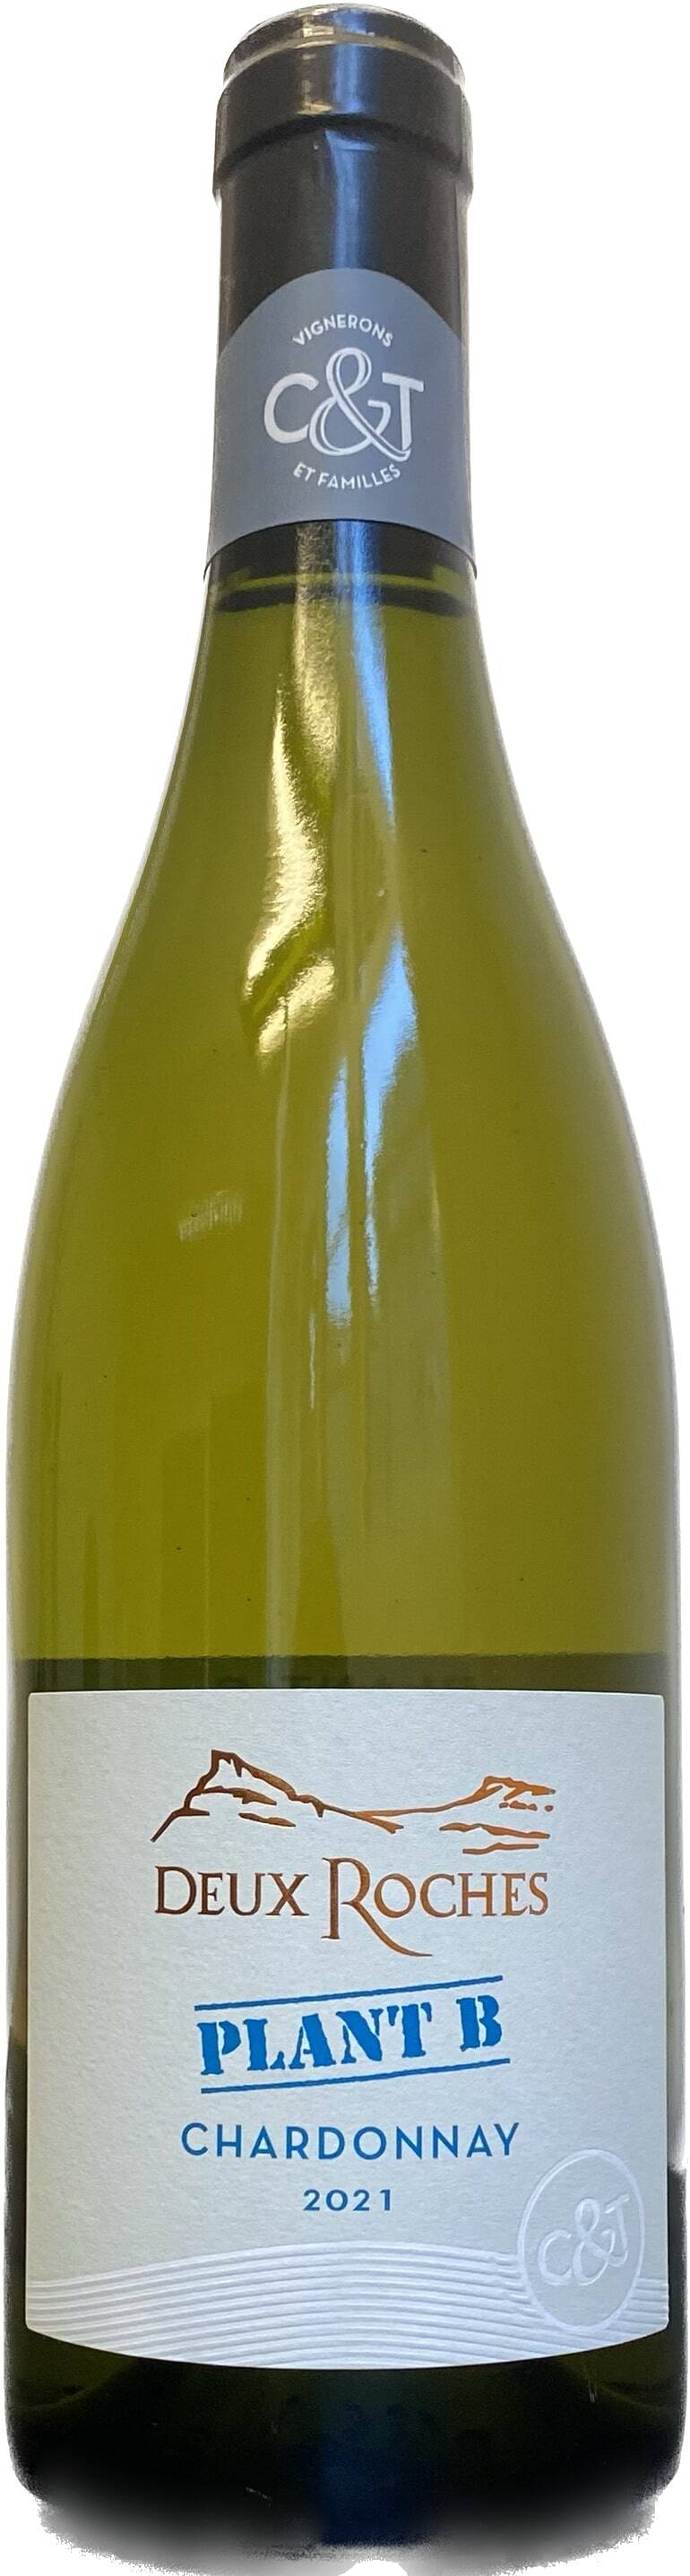 Chardonnay "Plant B" Vin de France